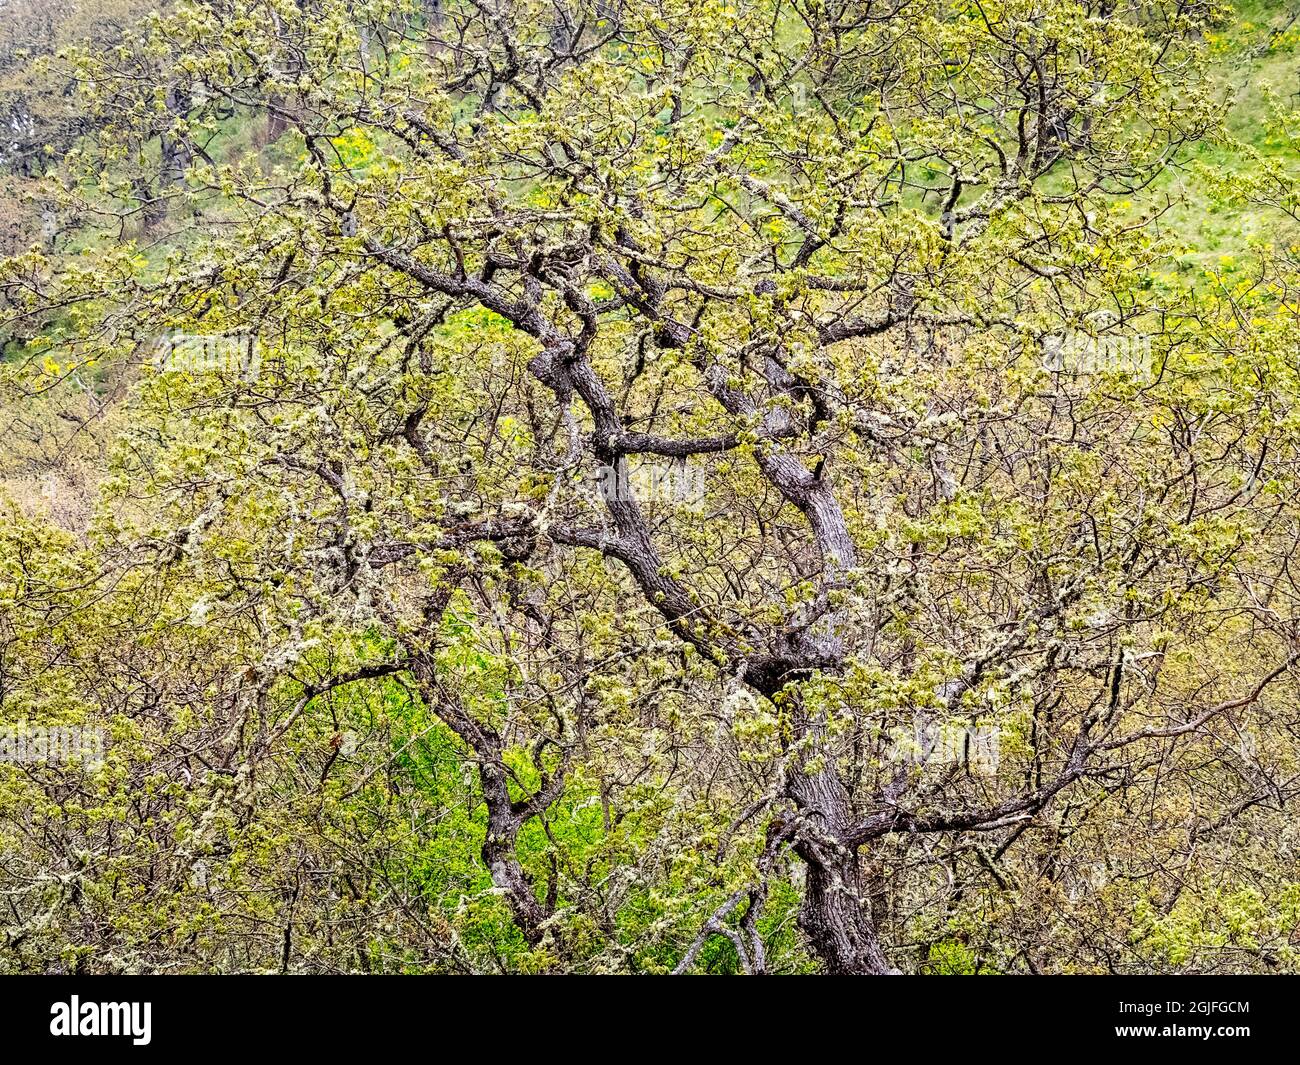 USA, Washington state, Snoqualmie Cottonwood albero in molle nuove foglie verdastre Foto Stock